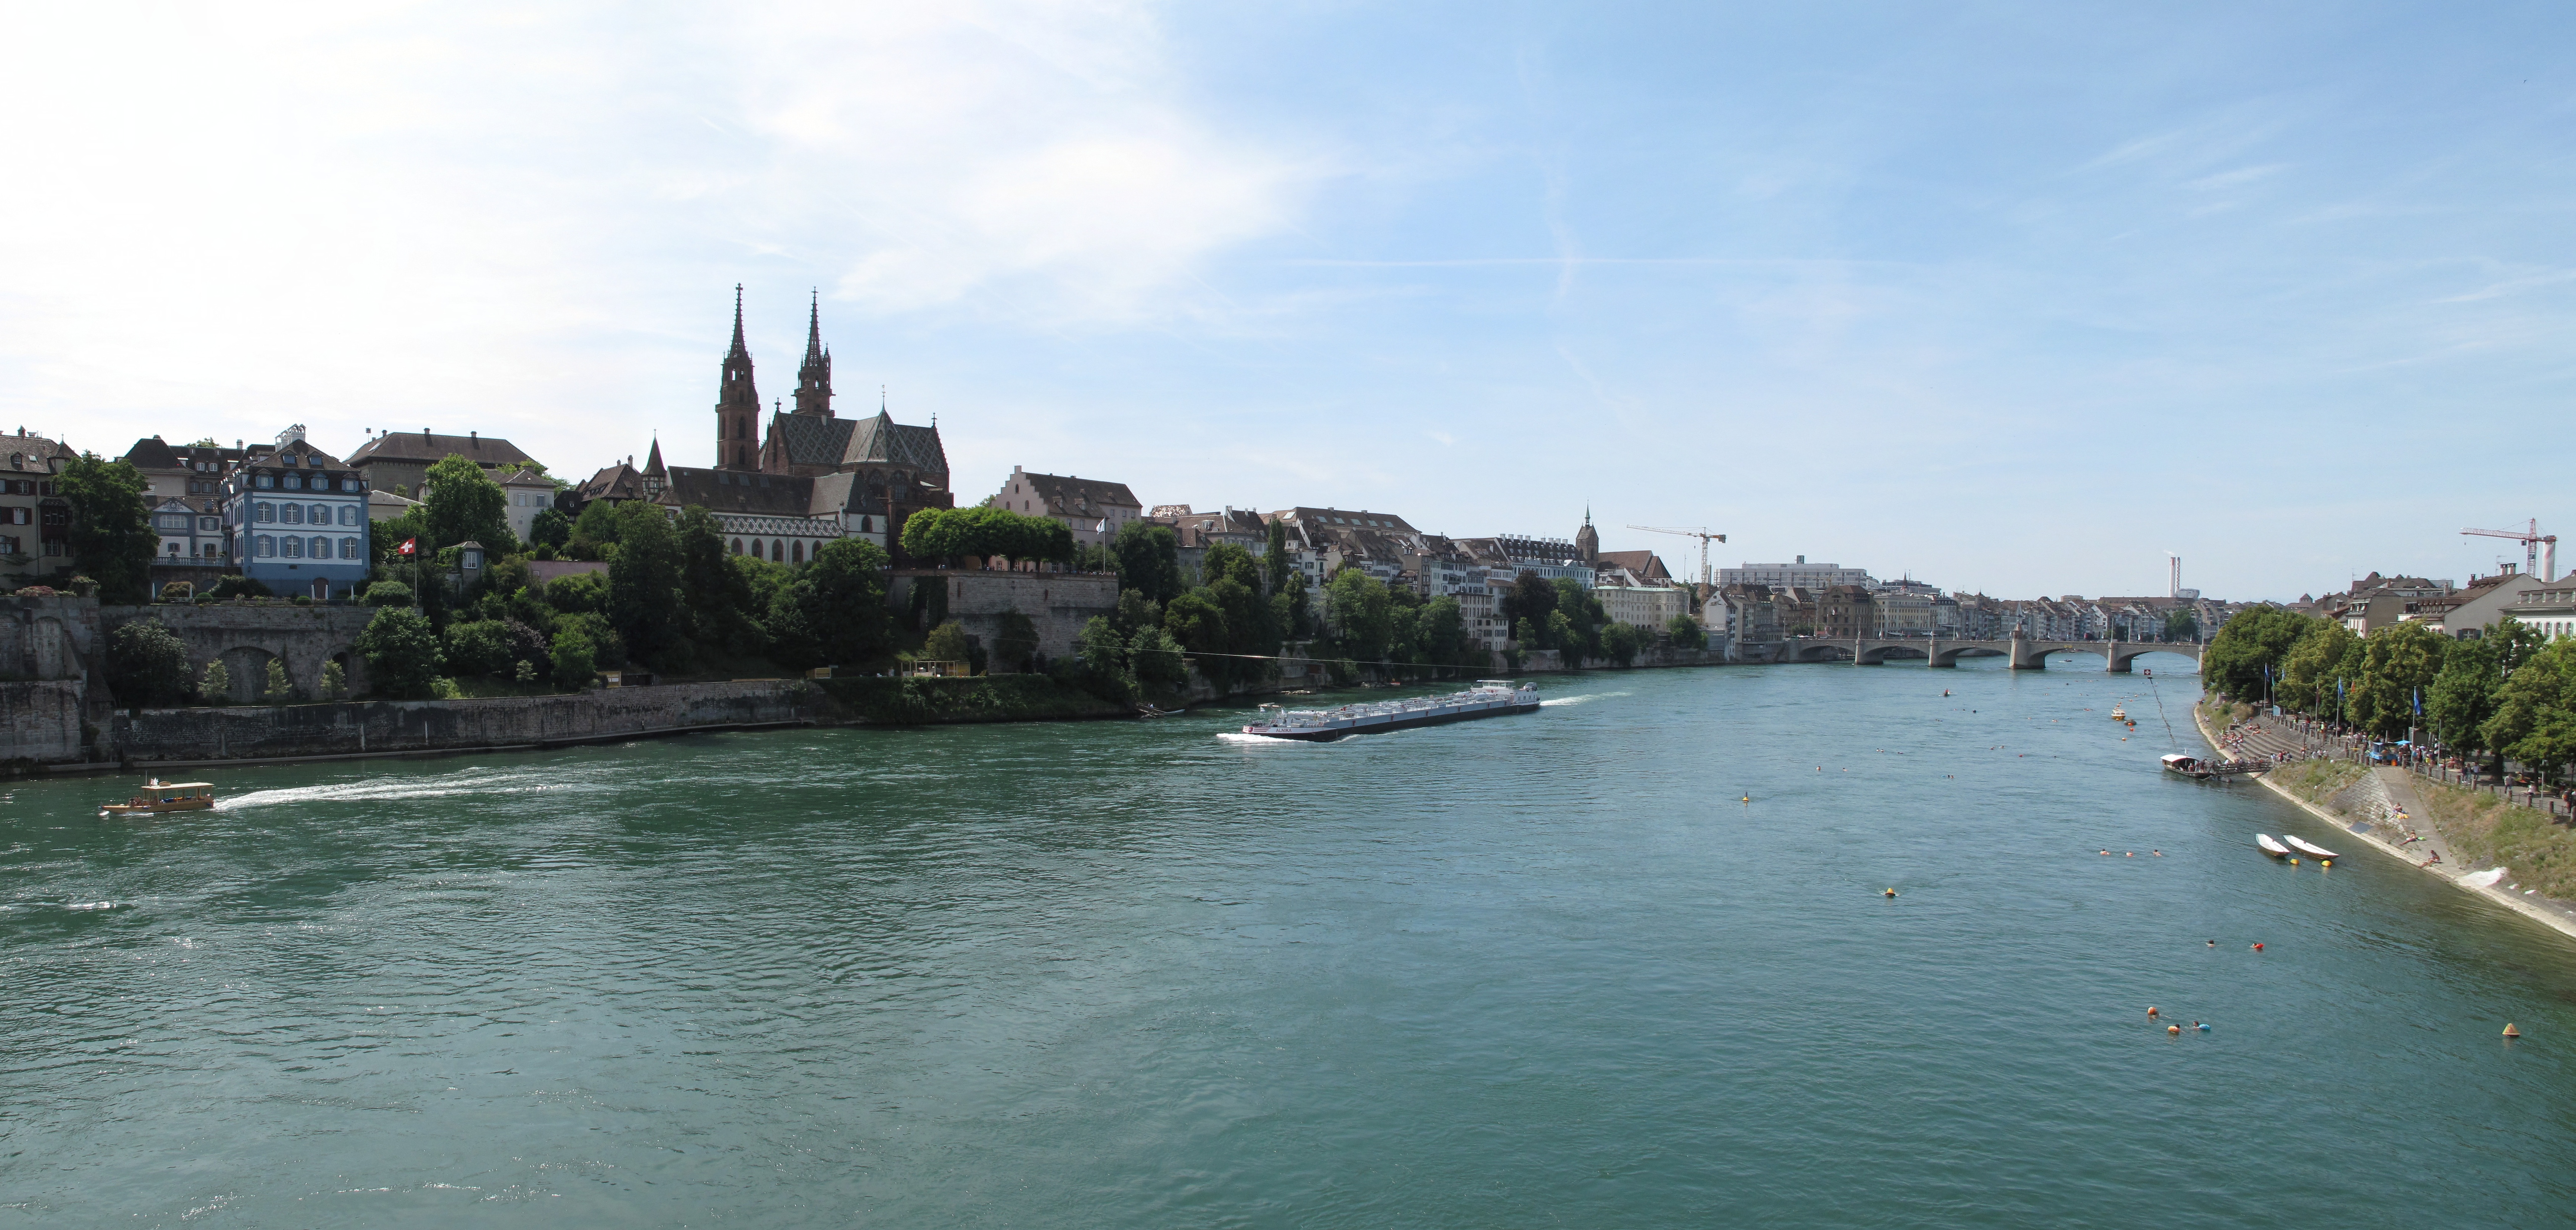 Rhine